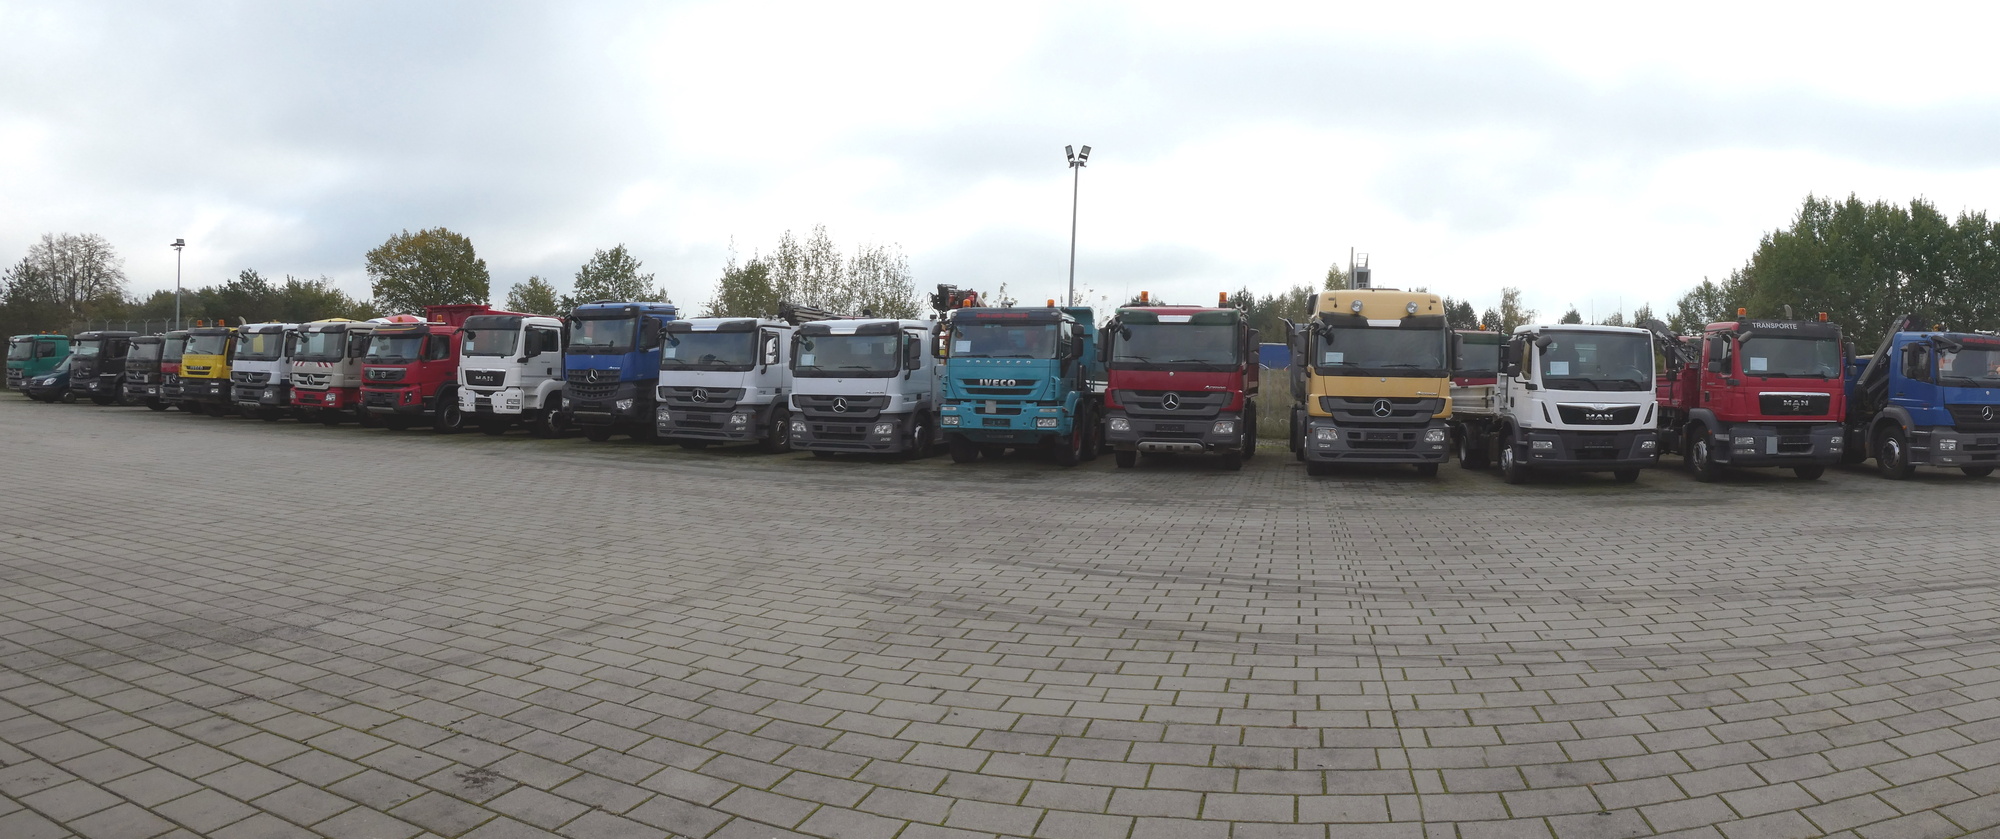 Henze Truck GmbH undefined: picture 1